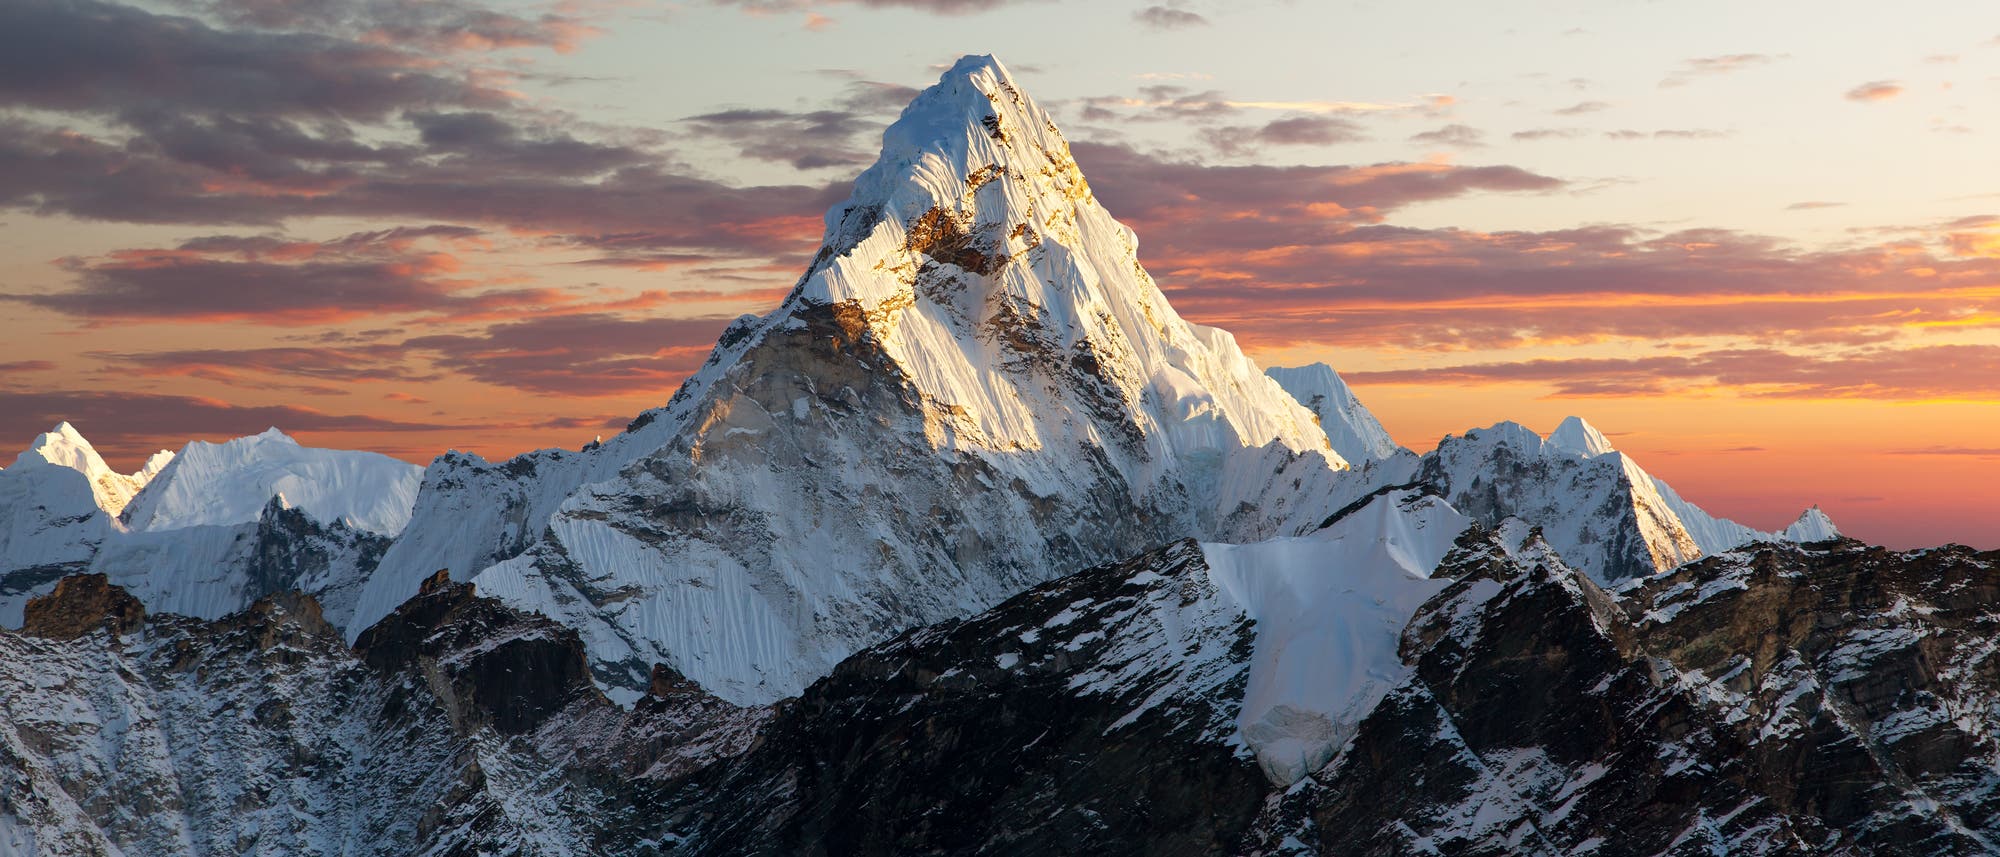 Der Berg Ama Dablam im Himalaja nahe dem Everest.